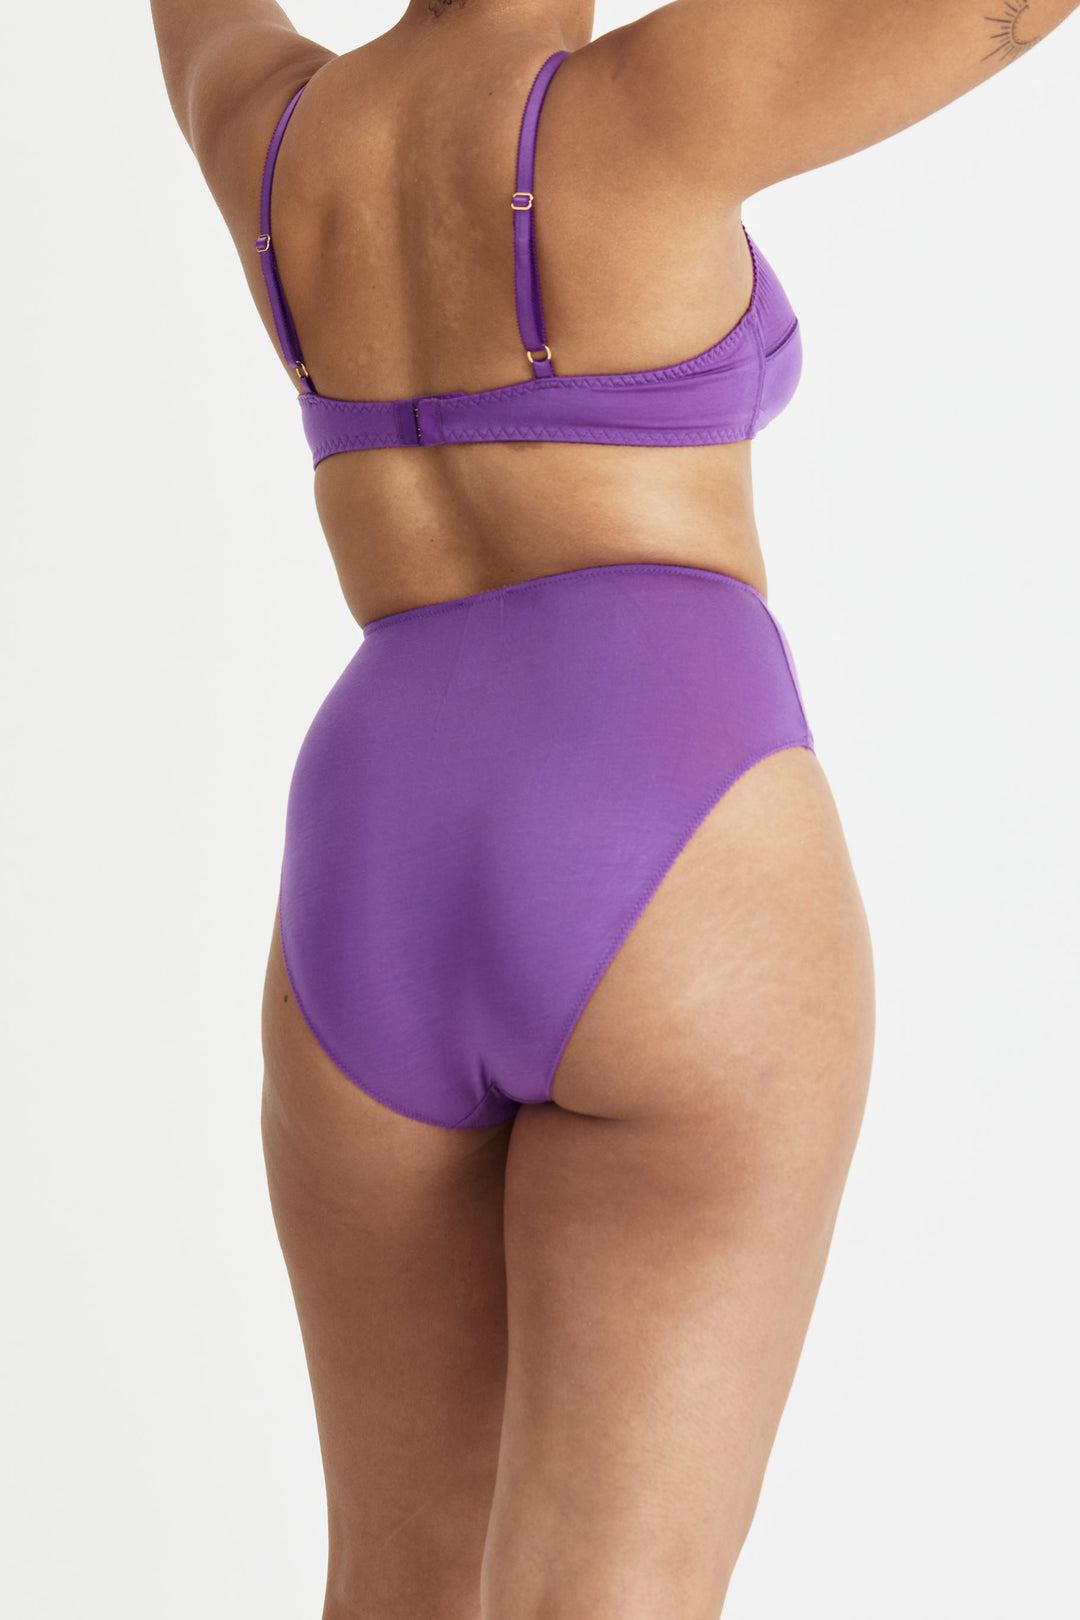 Videris Lingerie high waist knicker in purple TENCEL™  with cheeky bottom coverage